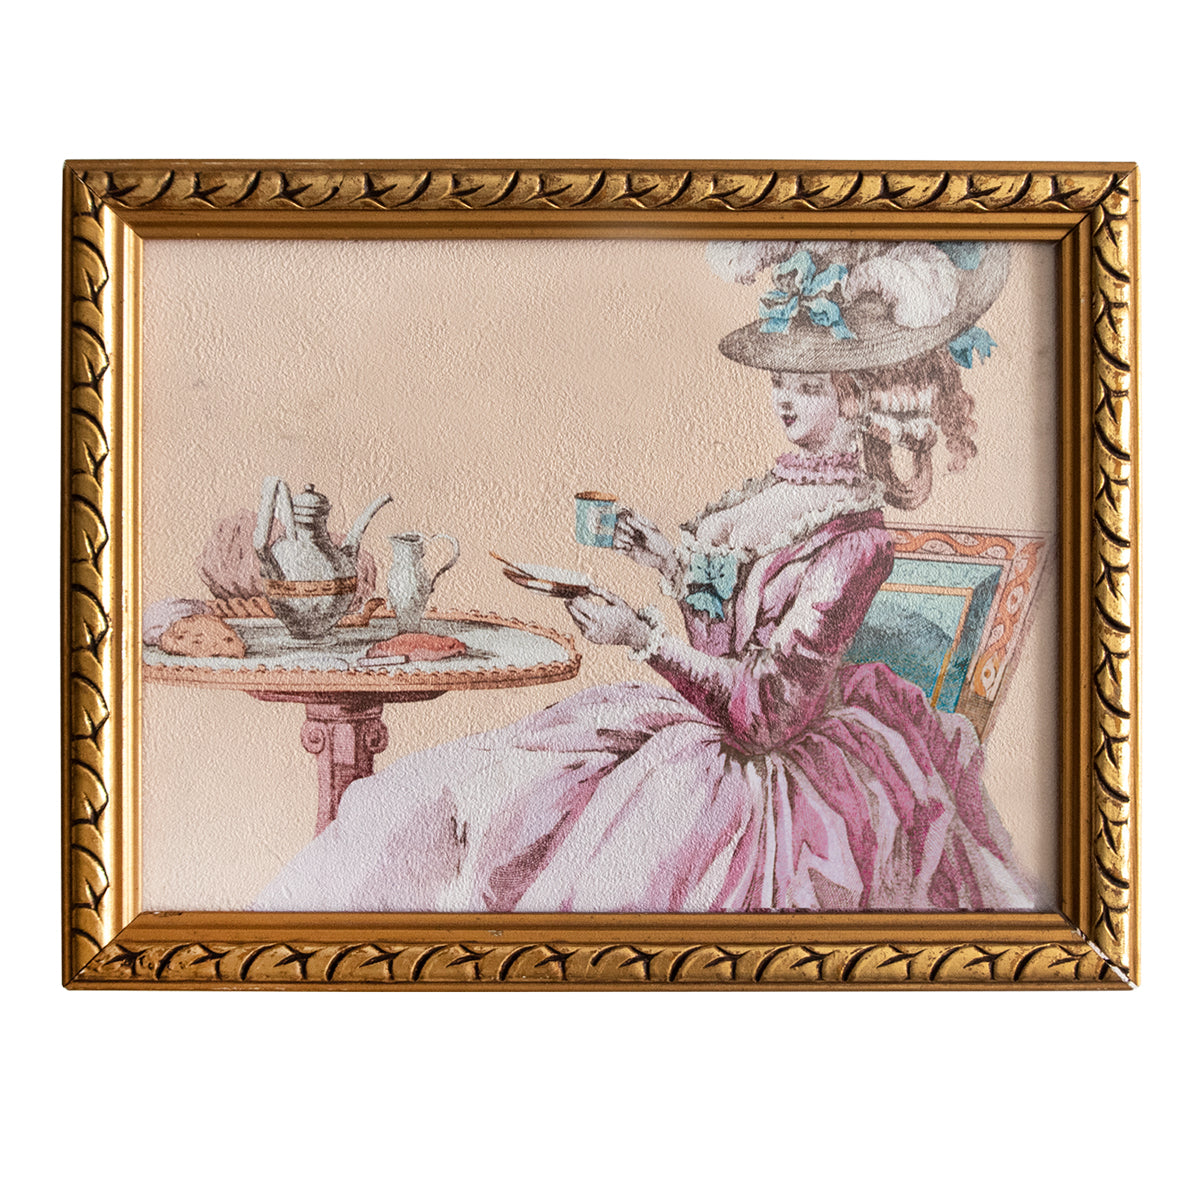 27×21cm アンティークフレーム Gold Frame Lady with Tea